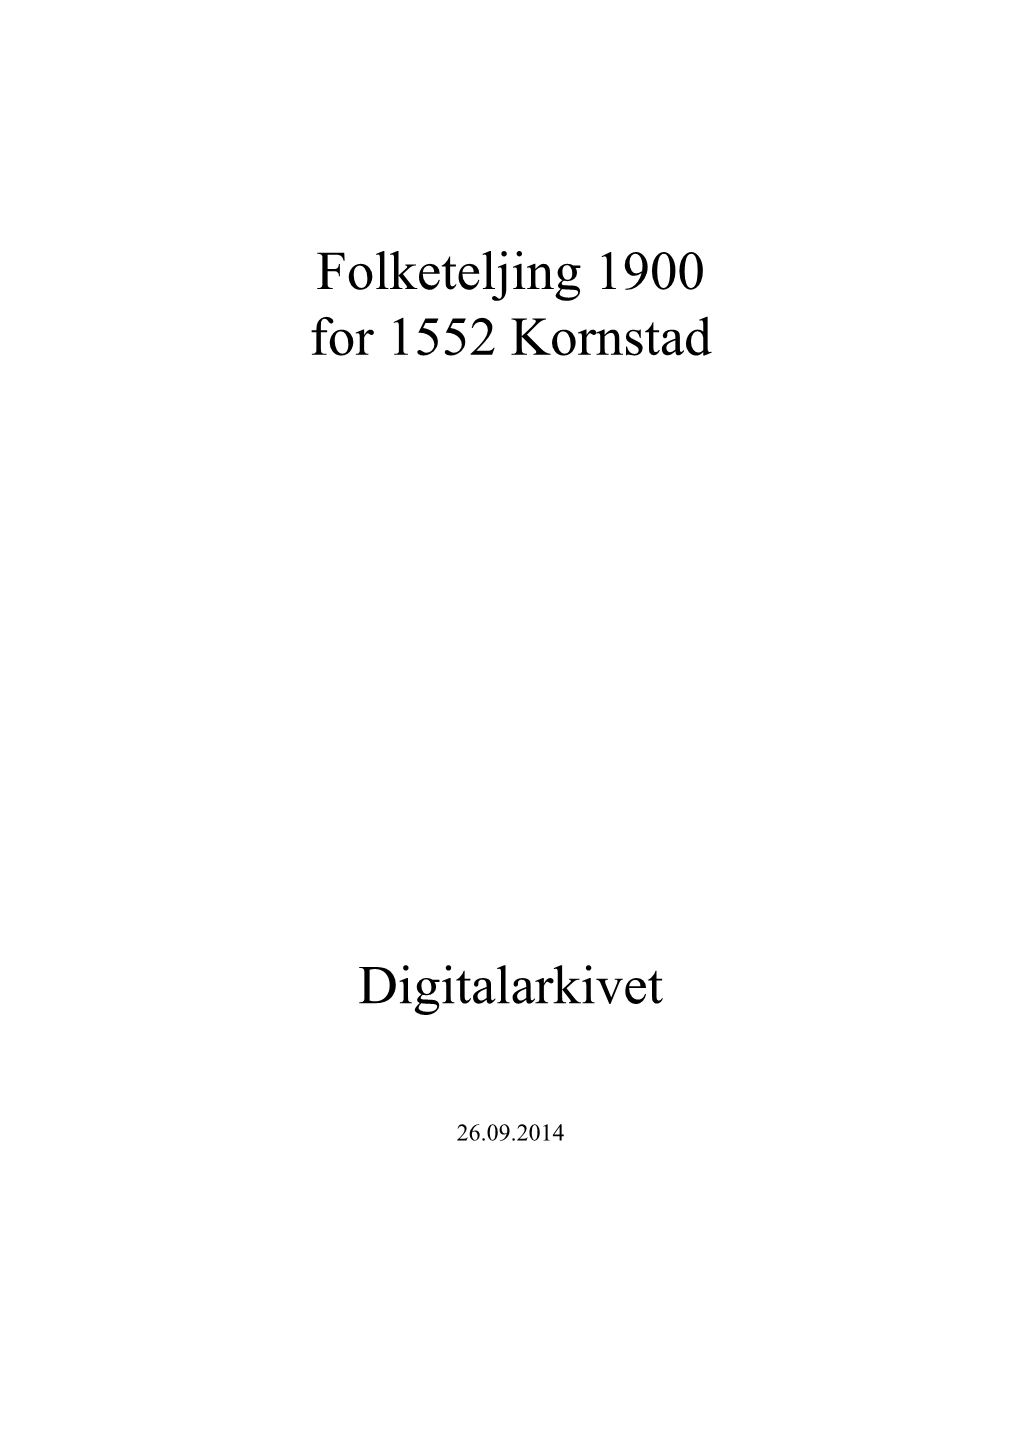 Folketeljing 1900 for 1552 Kornstad Digitalarkivet